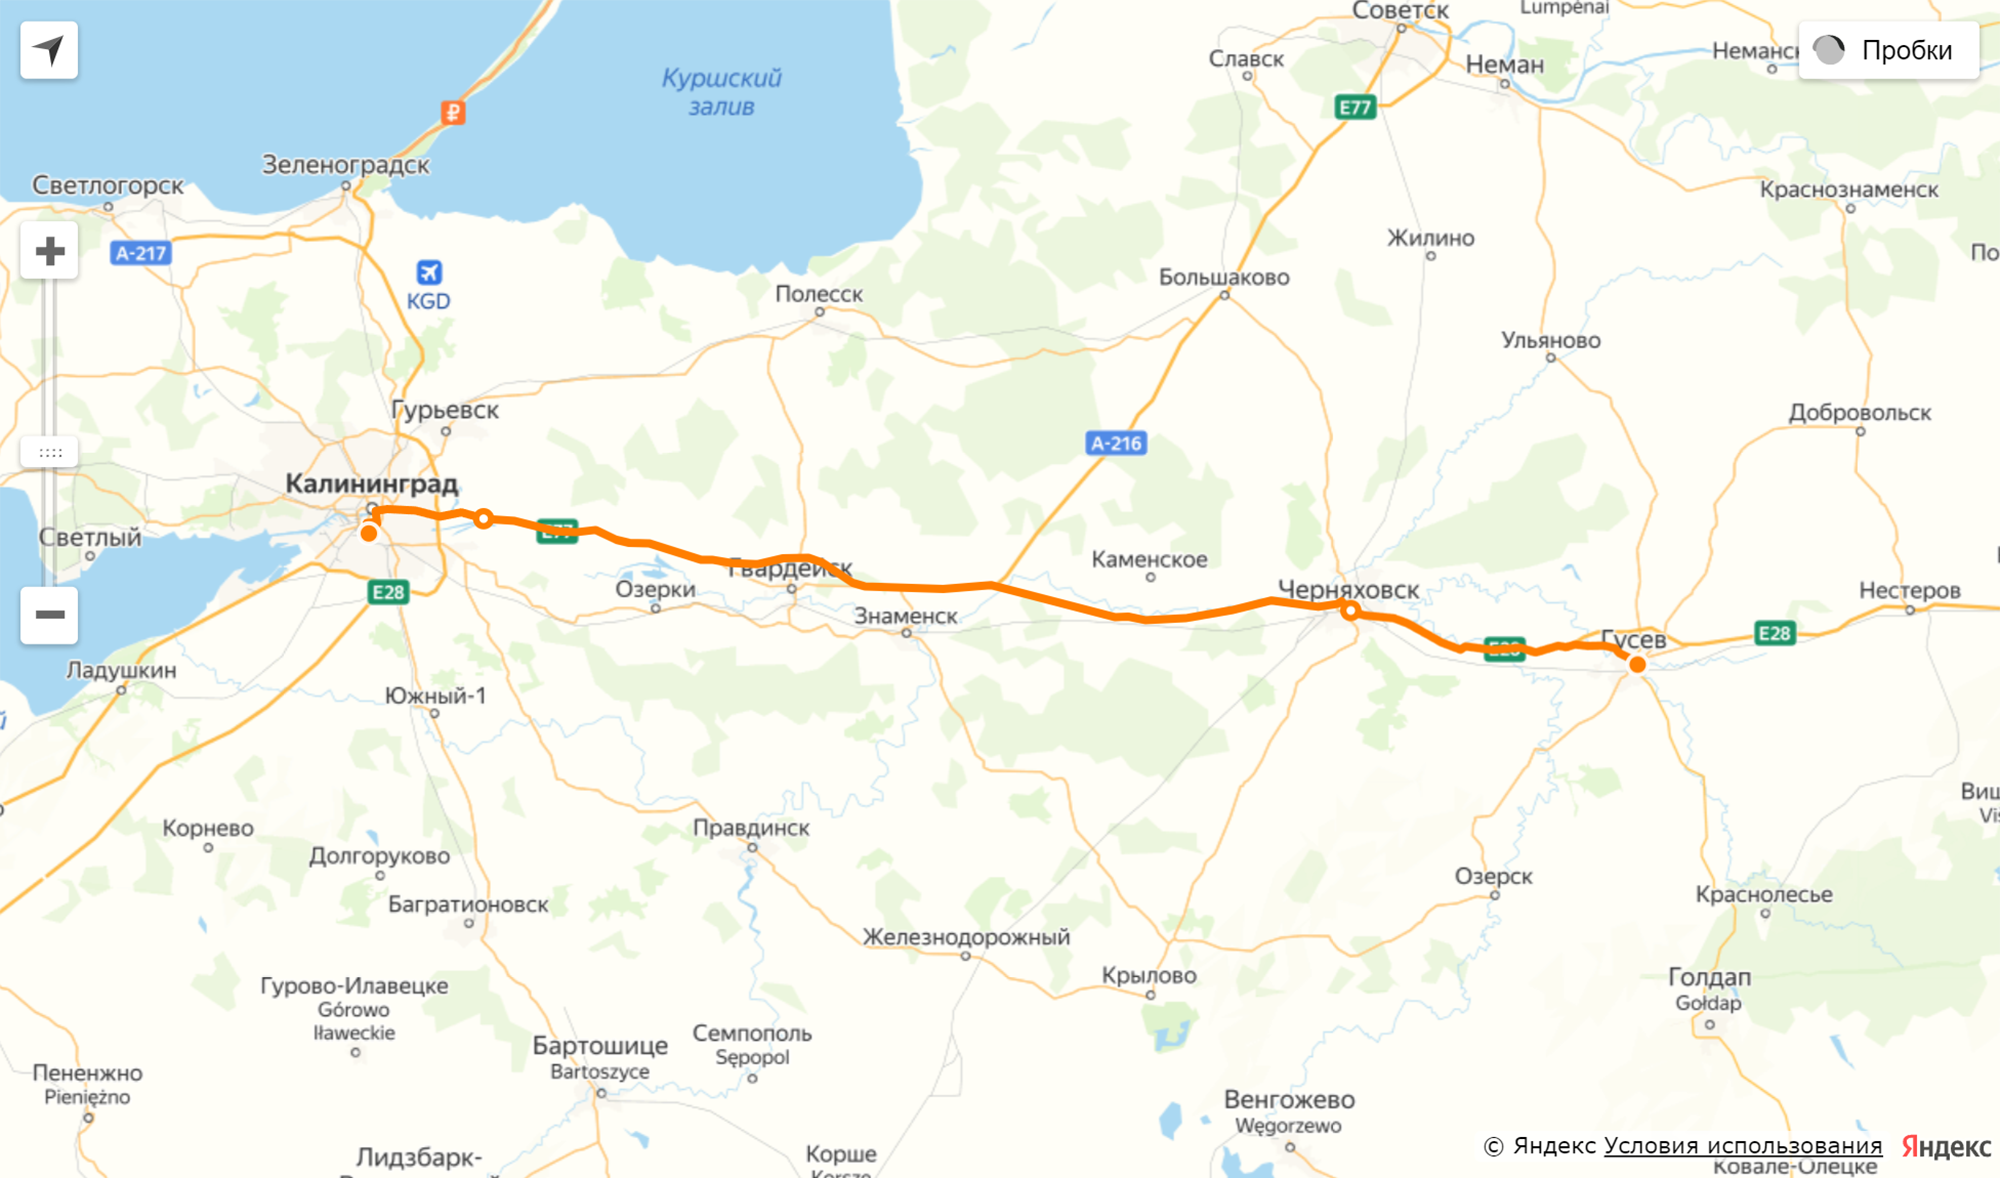 Карта маршрута № 680Э. Источник: rasp.yandex.ru